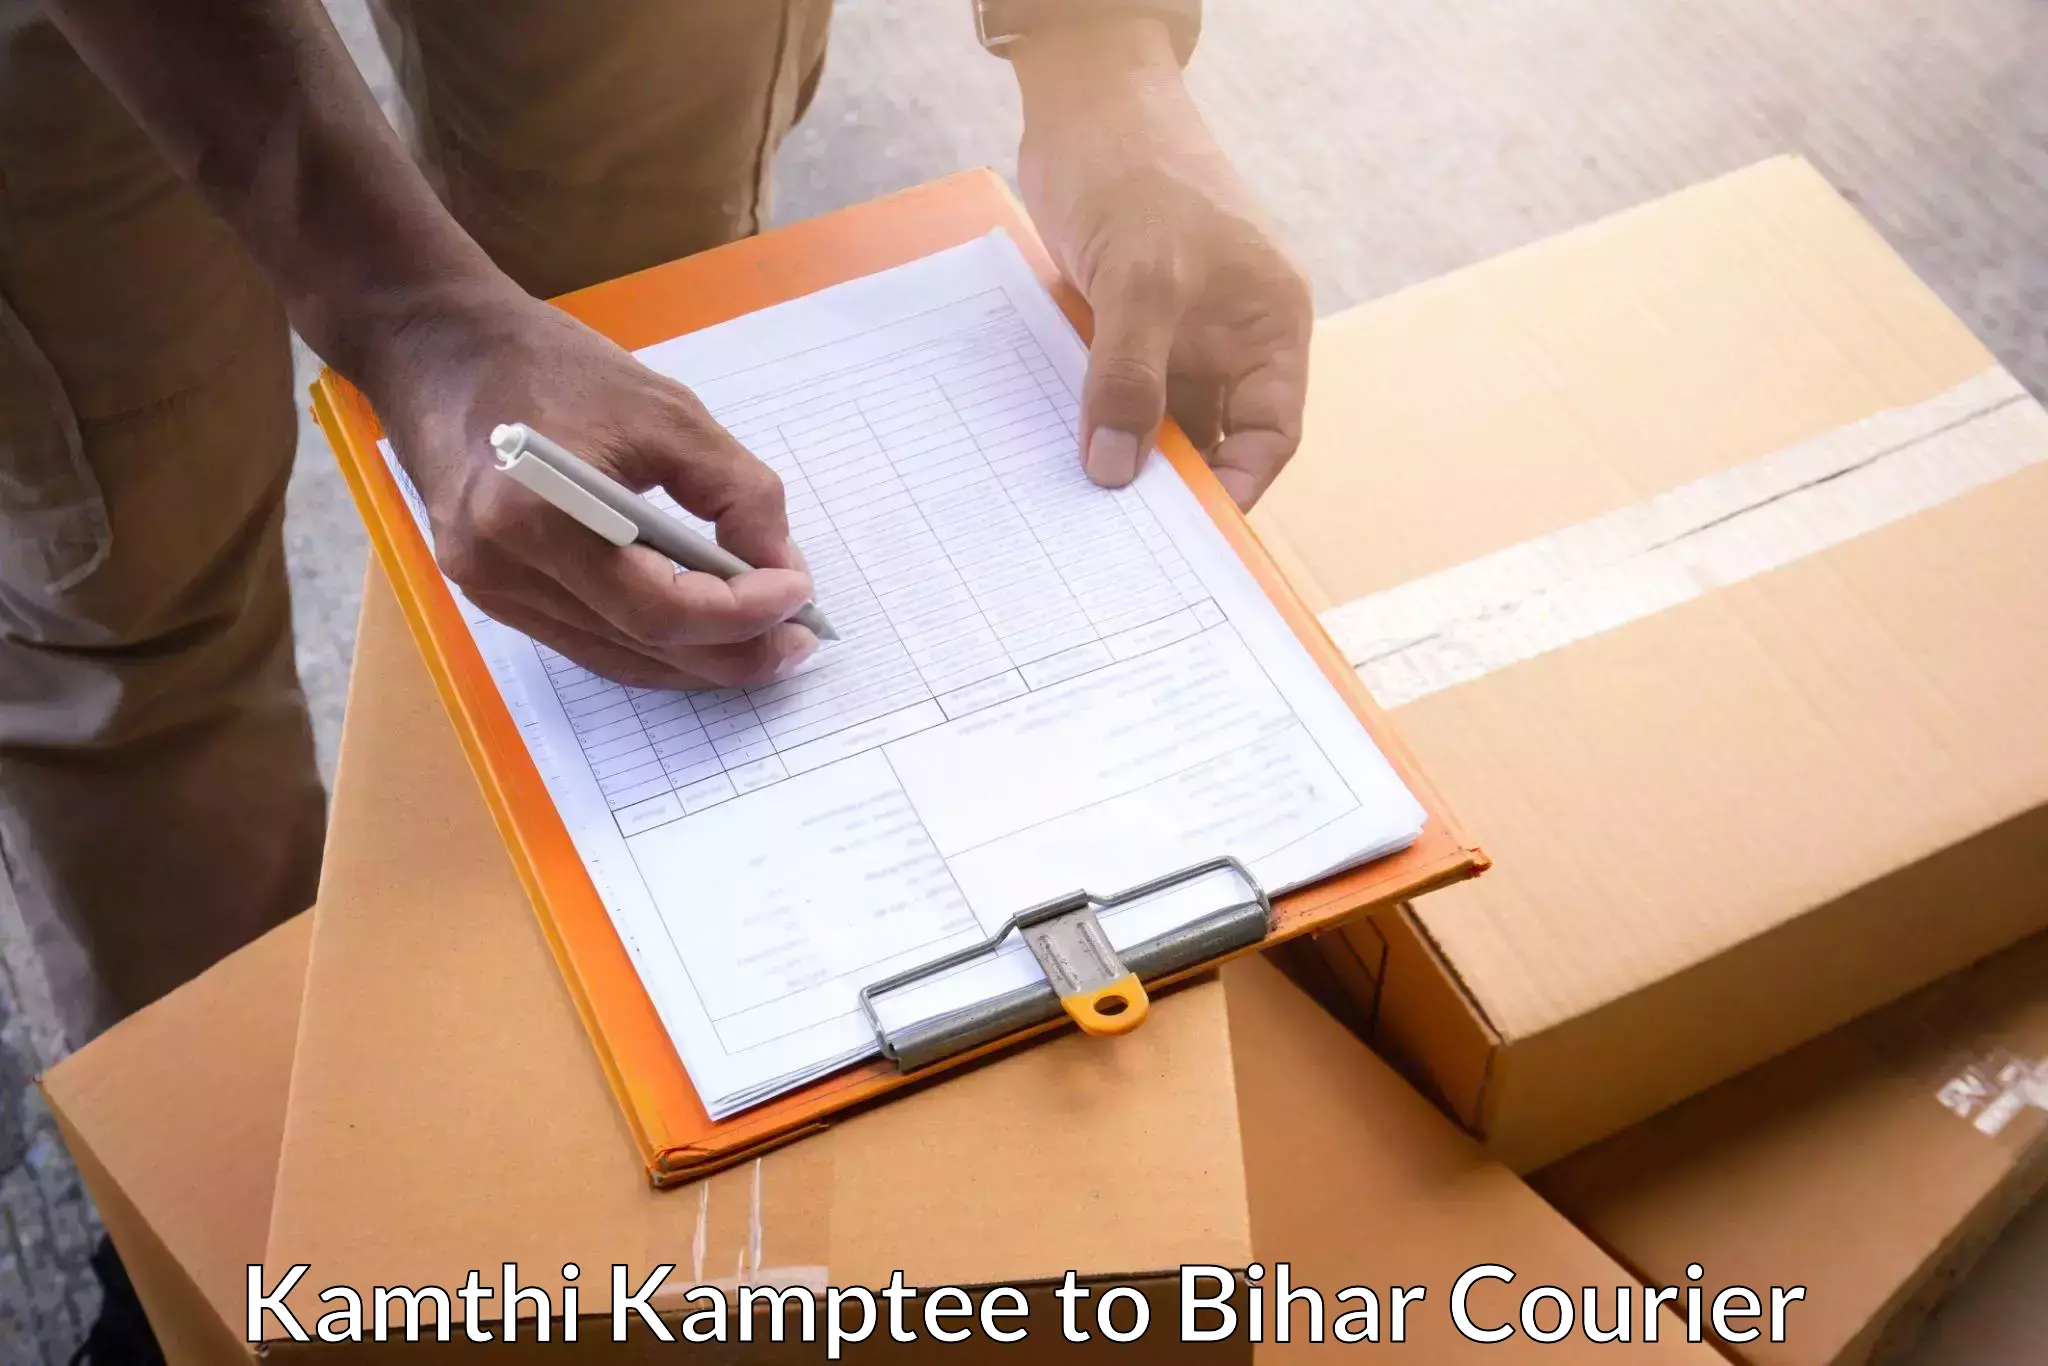 Courier service booking Kamthi Kamptee to Madhubani